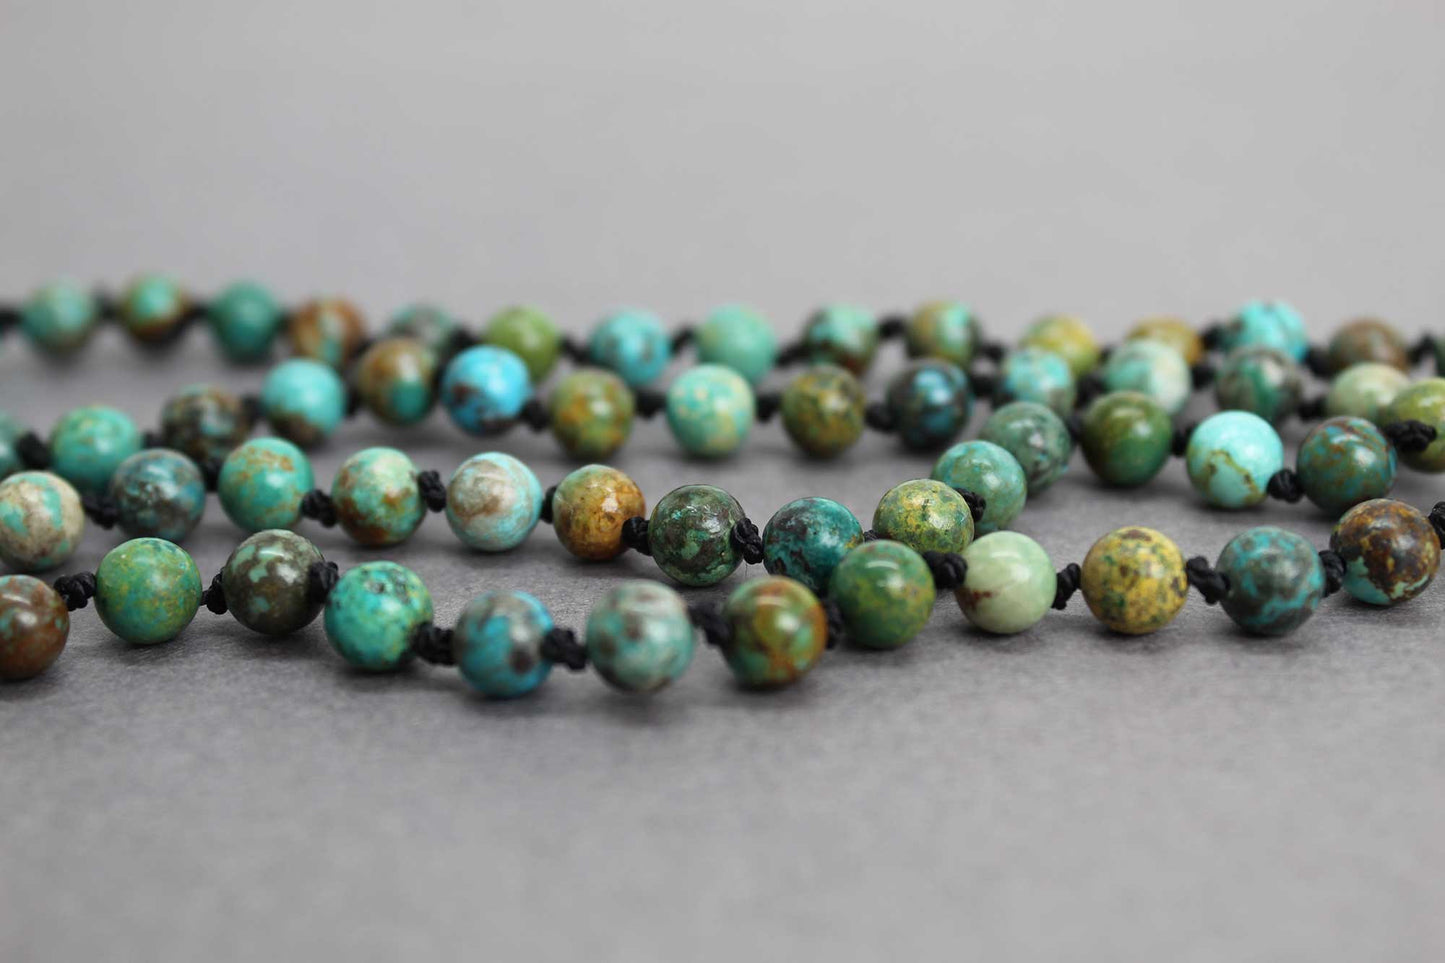 Genuine 4mm Hubei Turquoise Bead Necklace – Kathy Bankston